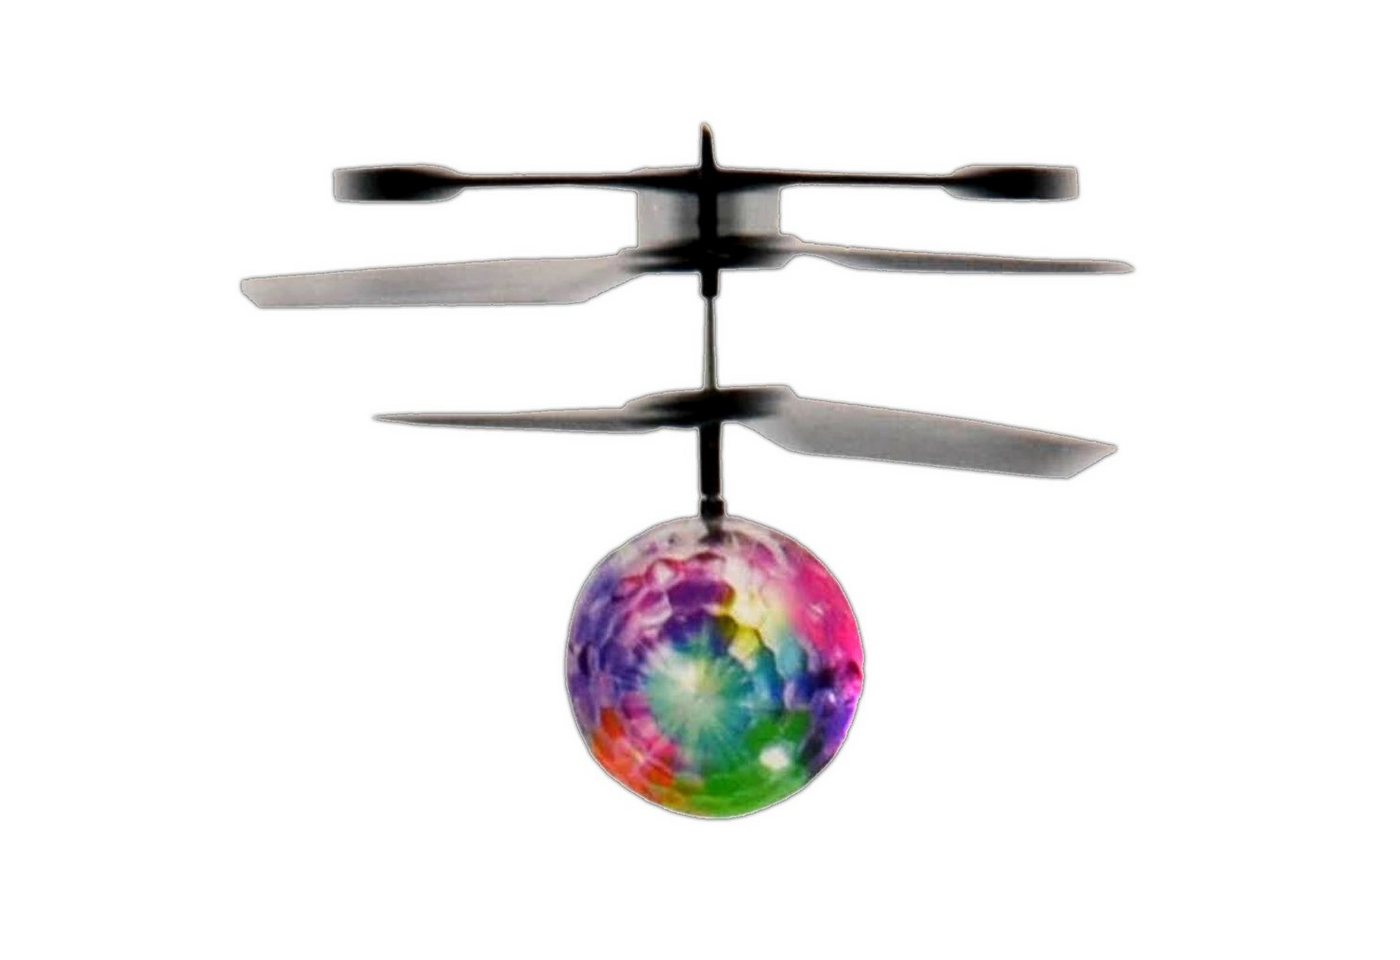 EAXUS Spielzeug-Hubschrauber Infrarot LED Fliegender Heli Ball Hubschrauber Kugel Heliball Kugel Helikopter, mit LED Beleuchtung, Selbstfliegend von EAXUS